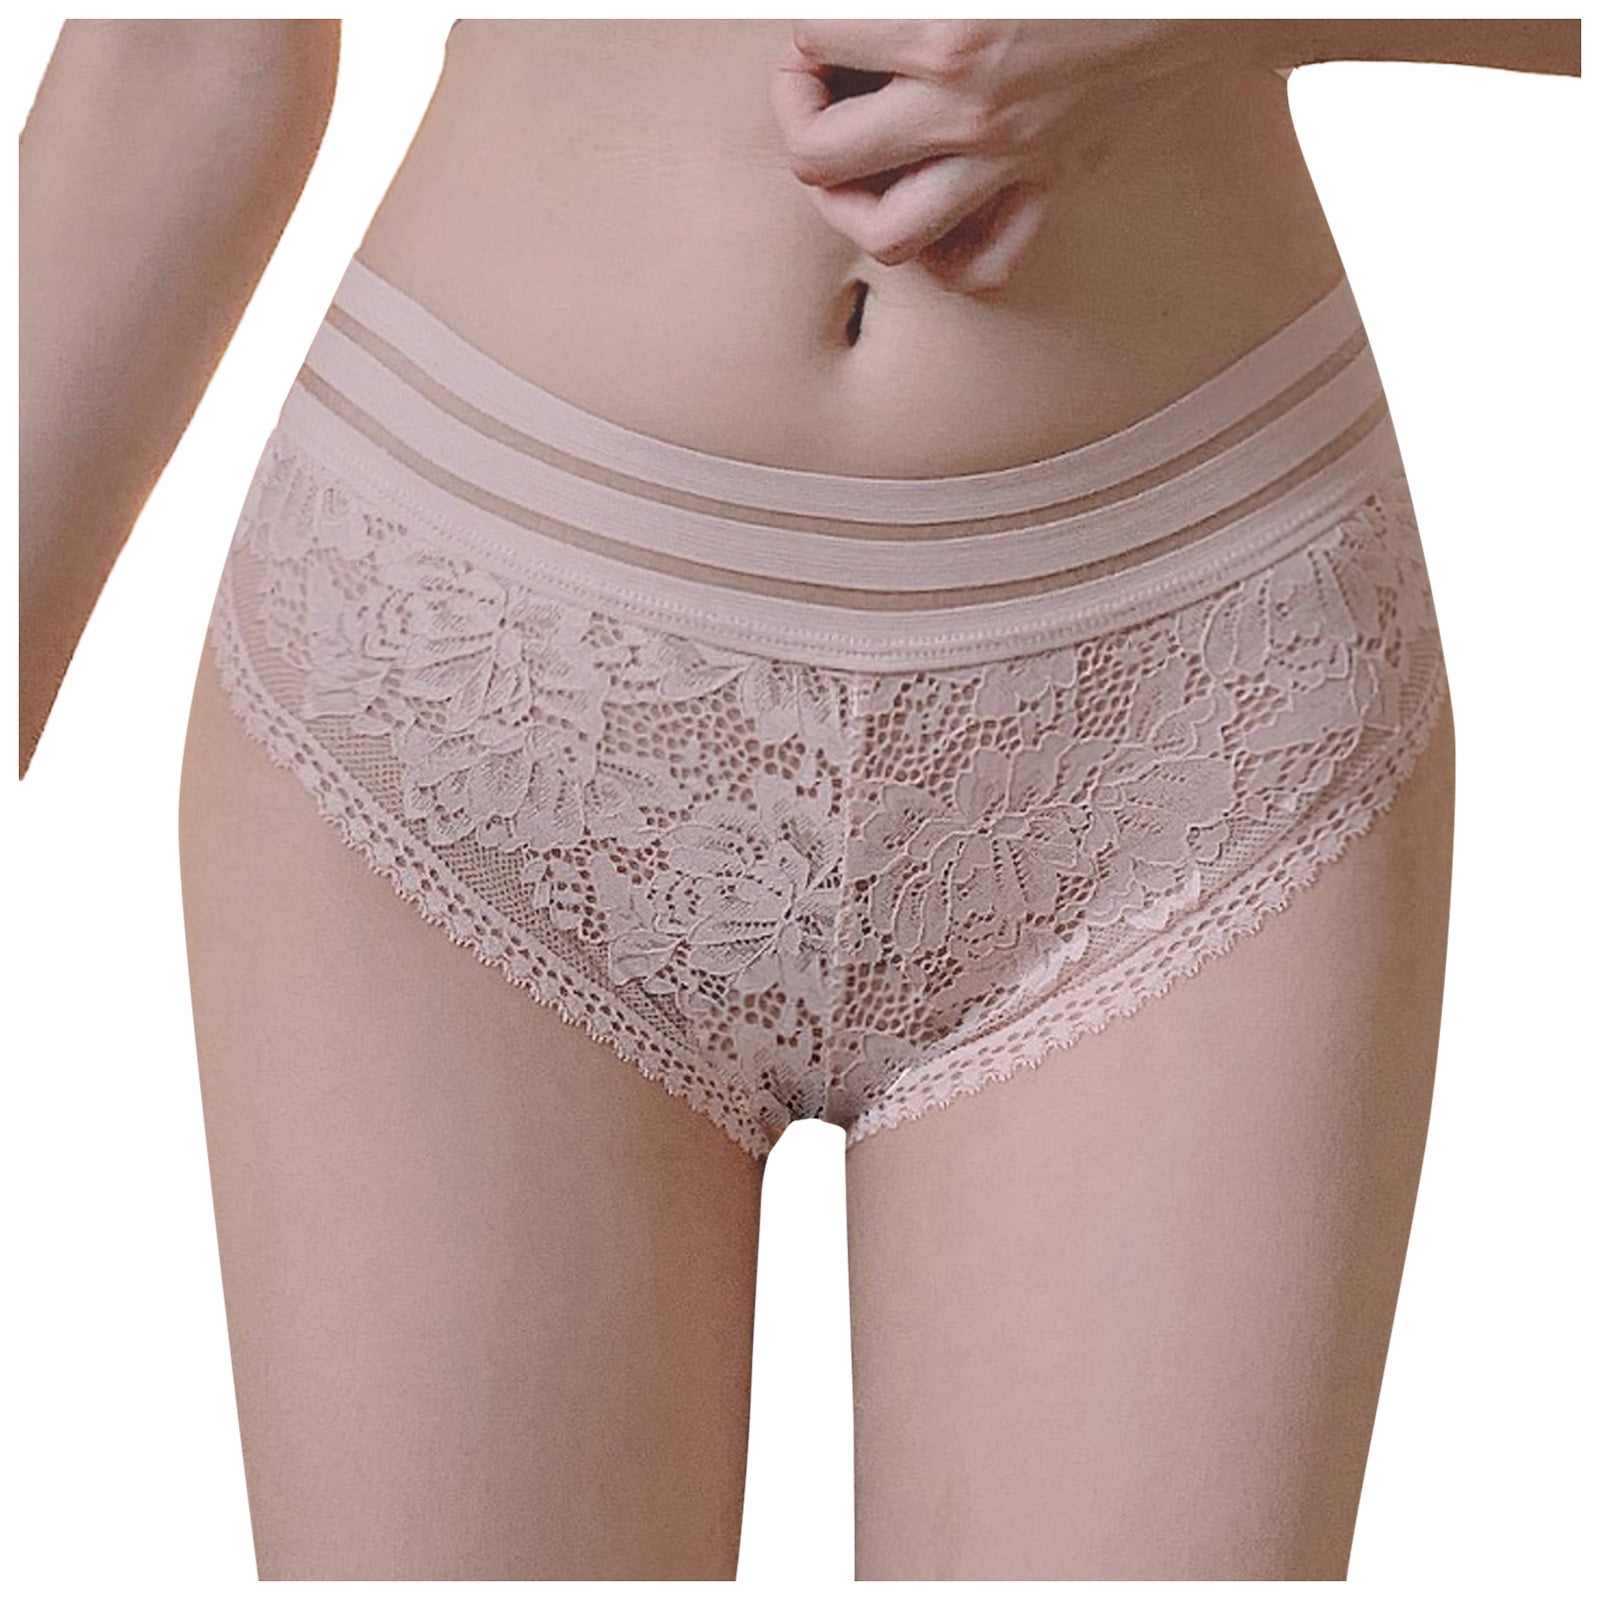 adviicd Cotton Panties Teen Girls Underwear Cotton Soft Panties